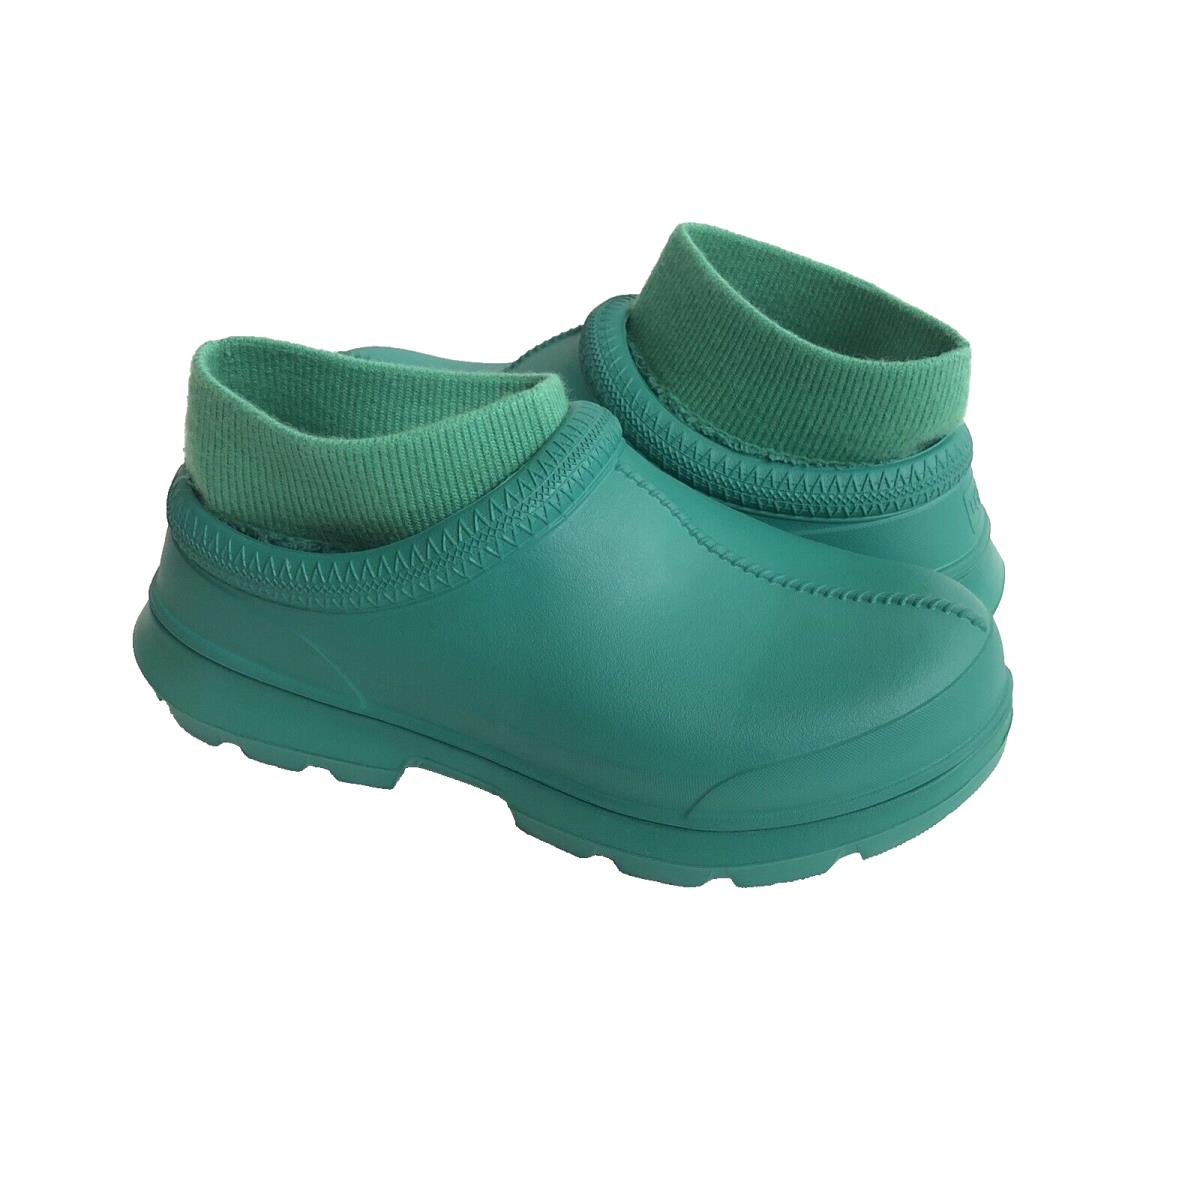 Ugg Women Tasman X Emerald Green Slip ON Moccasin Shoes US 8 / EU 39 / UK 6